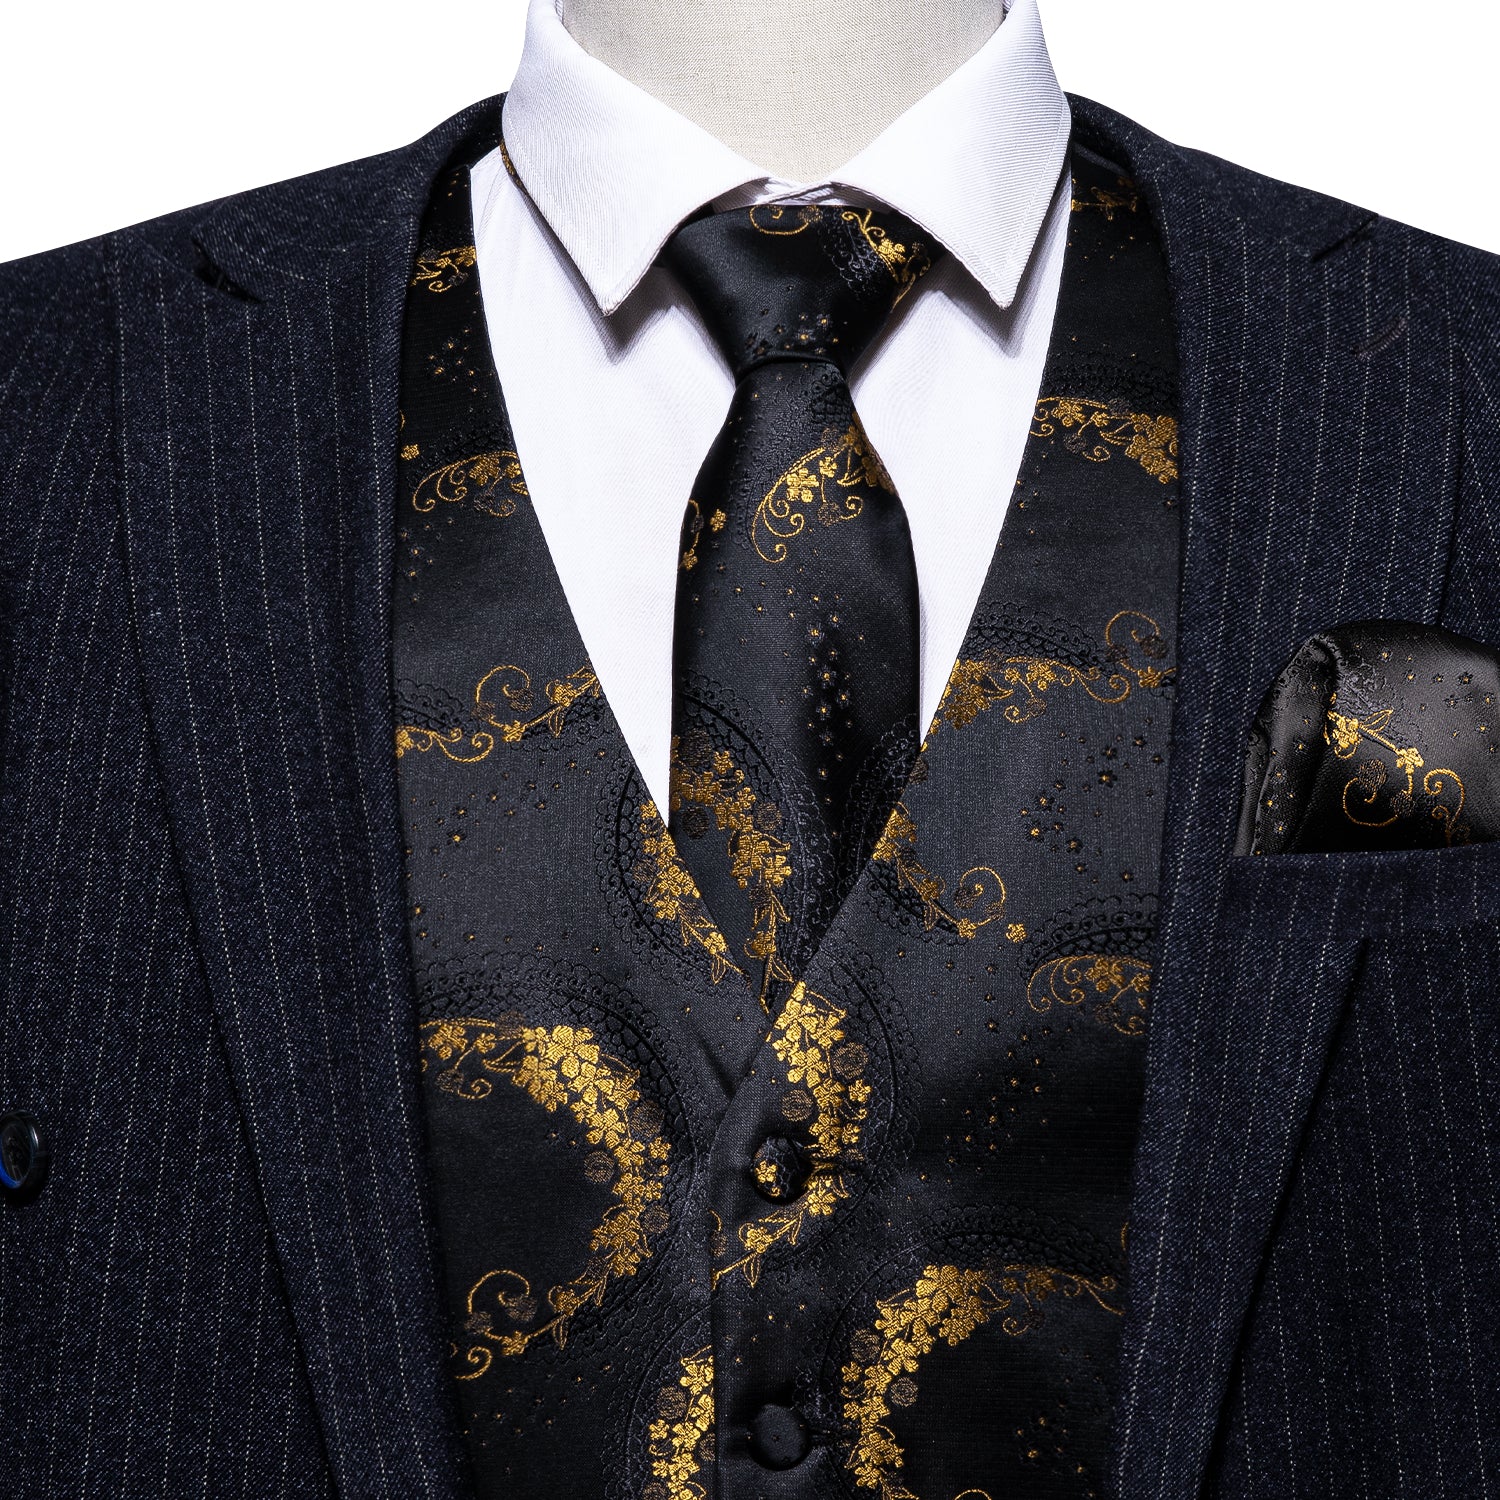 Classy Men's Black Golden Paisley Silk Vest Necktie Pocket square Cufflinks